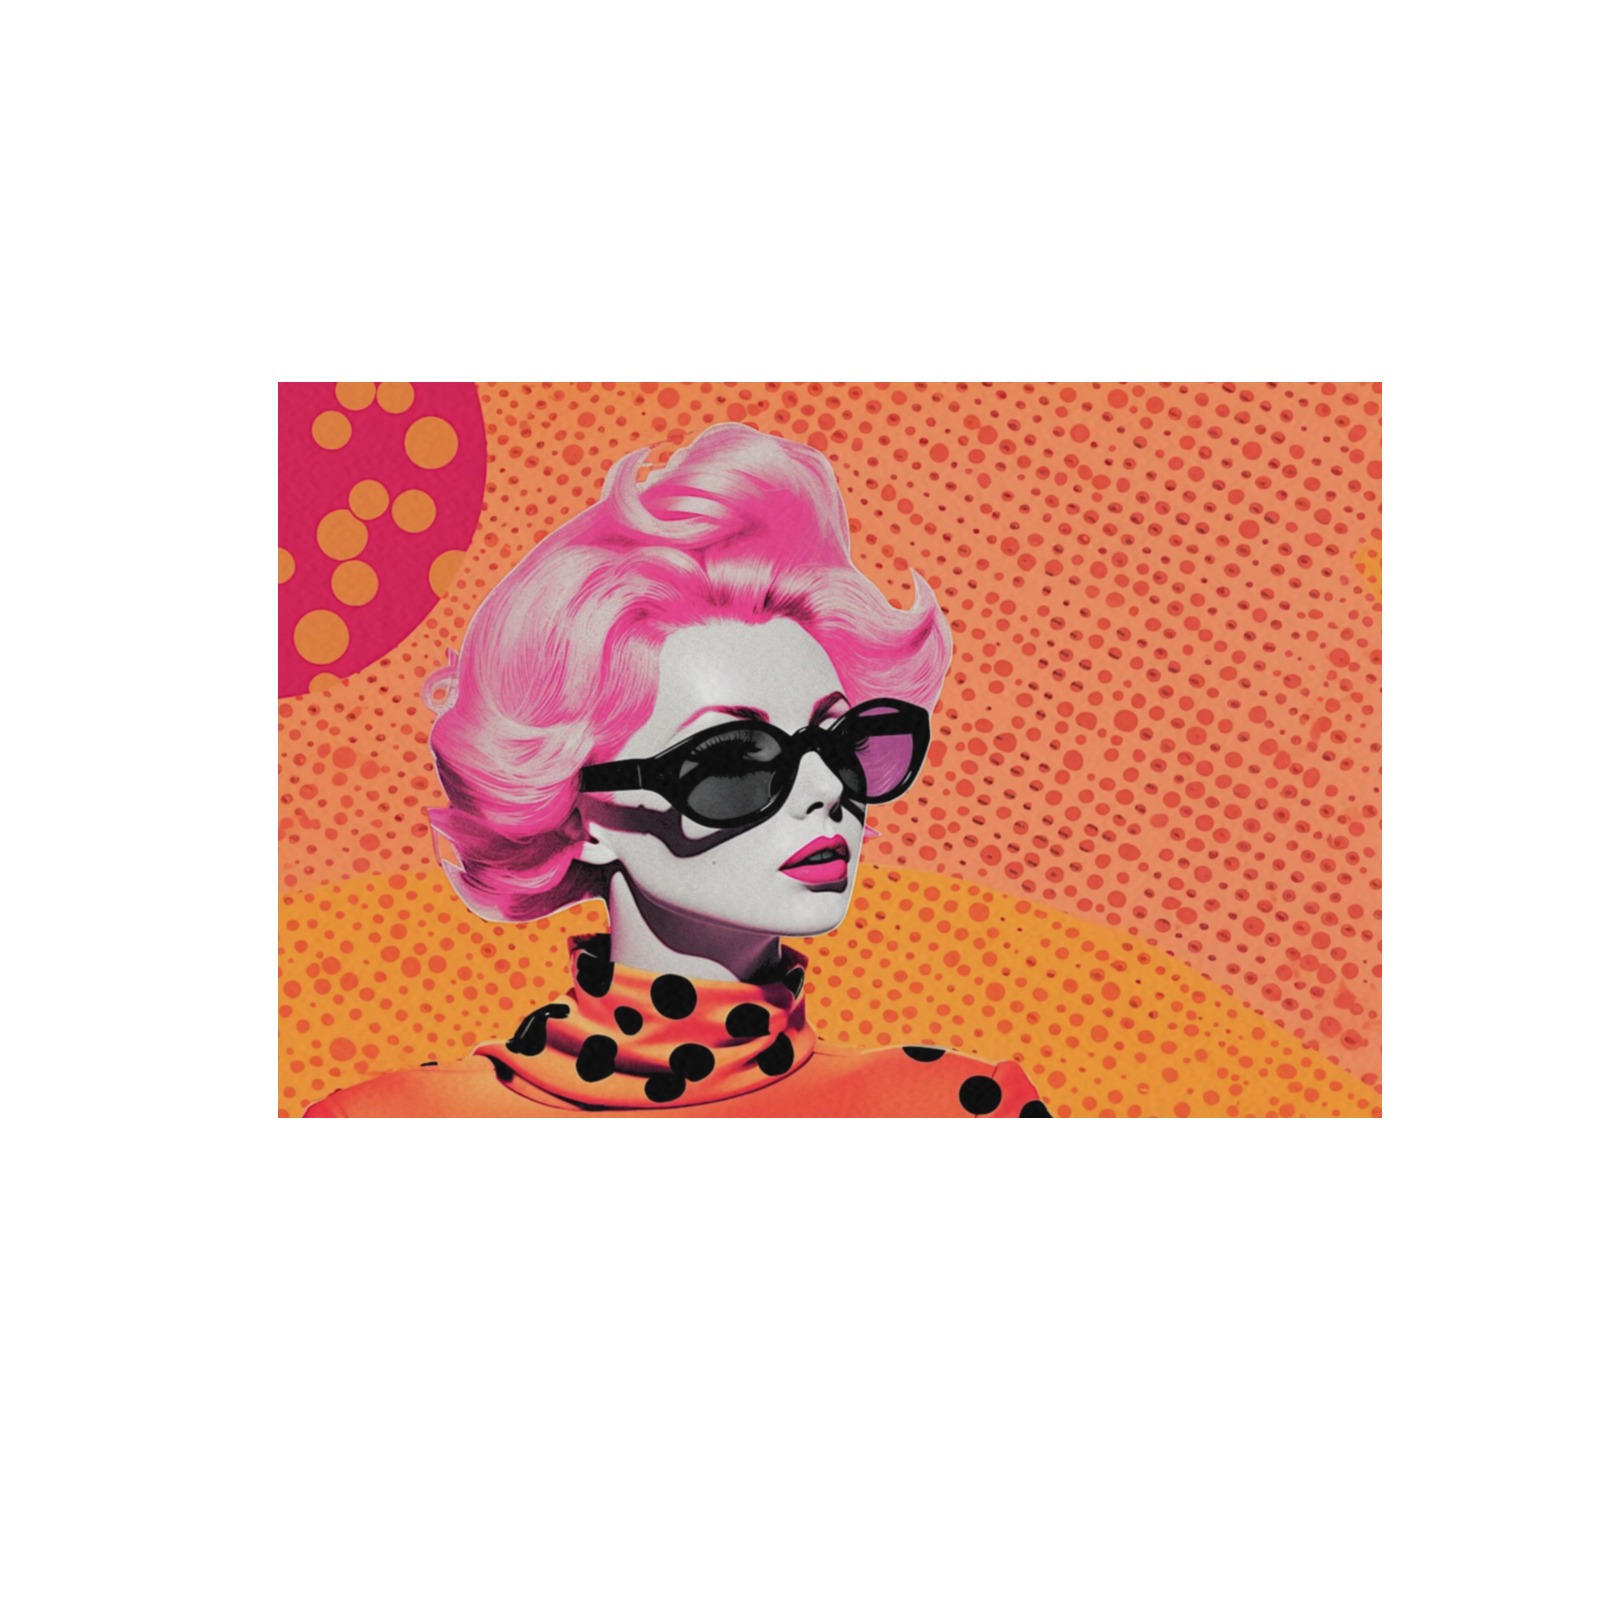 Bernice Retro Glam Lady Weird Wall Art Pop Art Frame Canvas Print 48"x32"